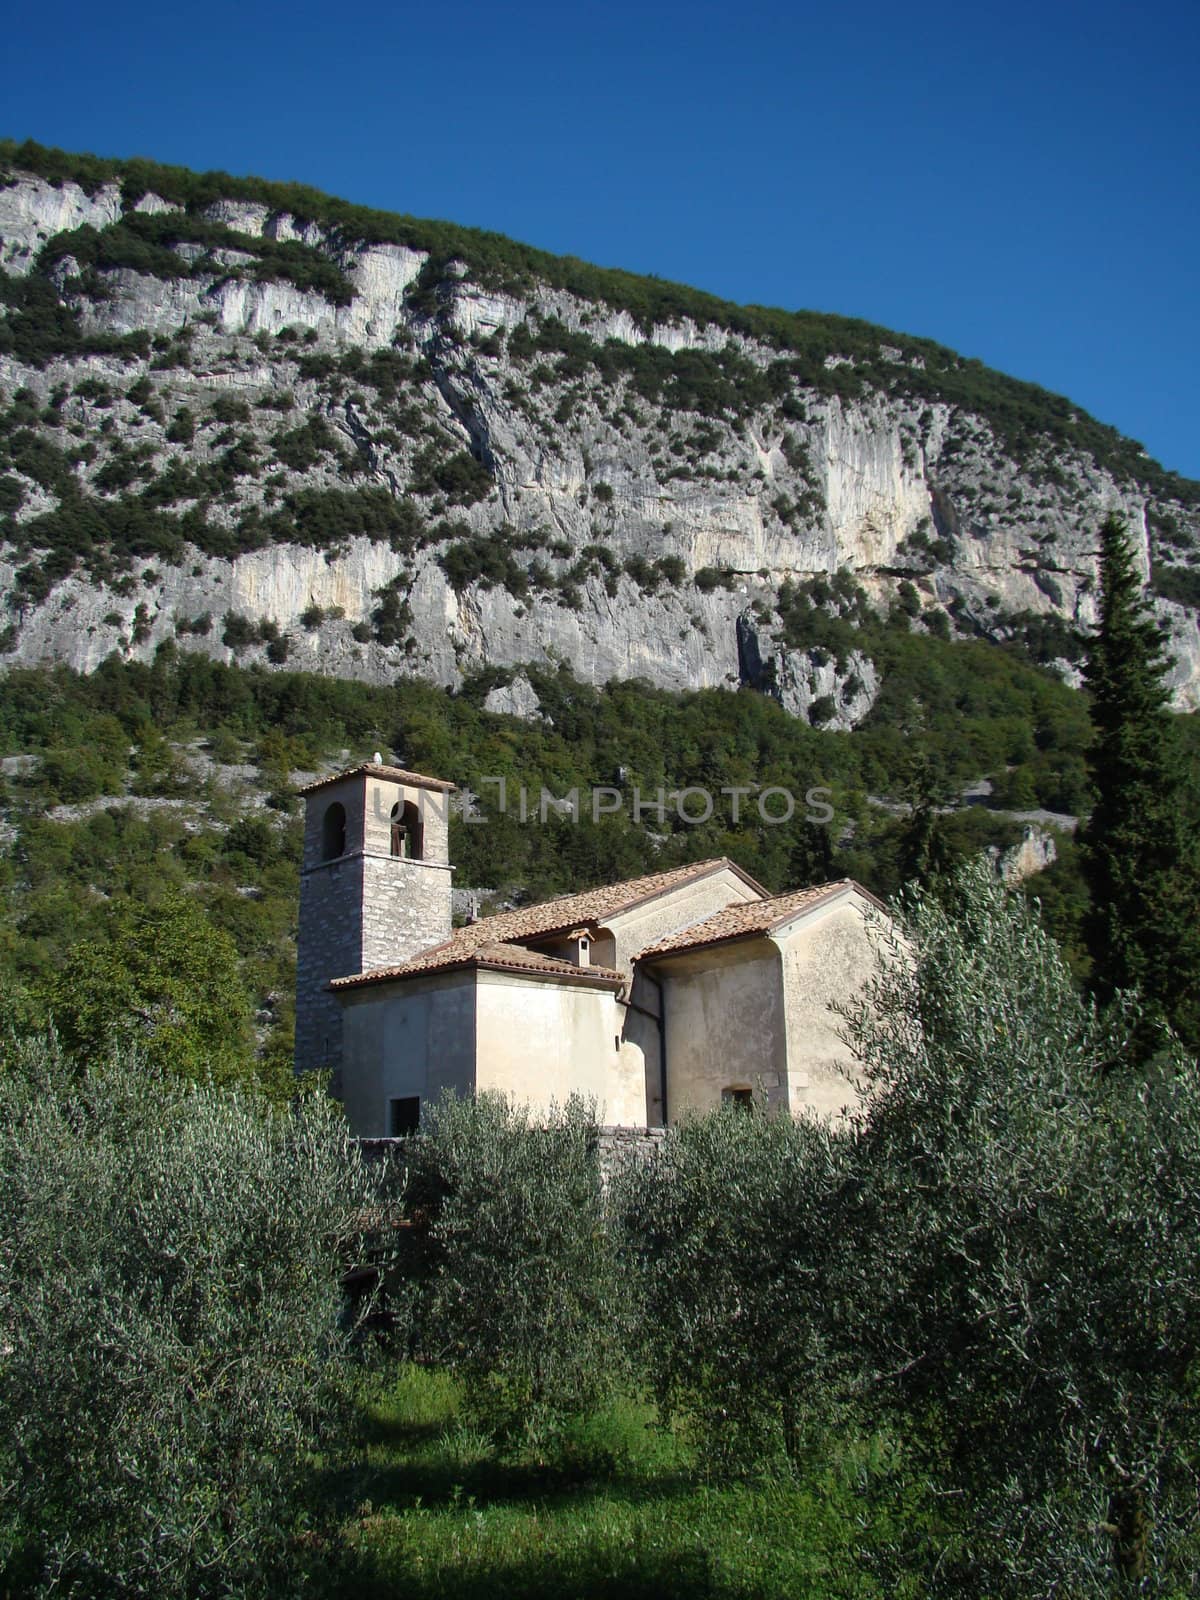 church in countryside, Trento region,north Italy.
Close to north coast of lake Garda.
